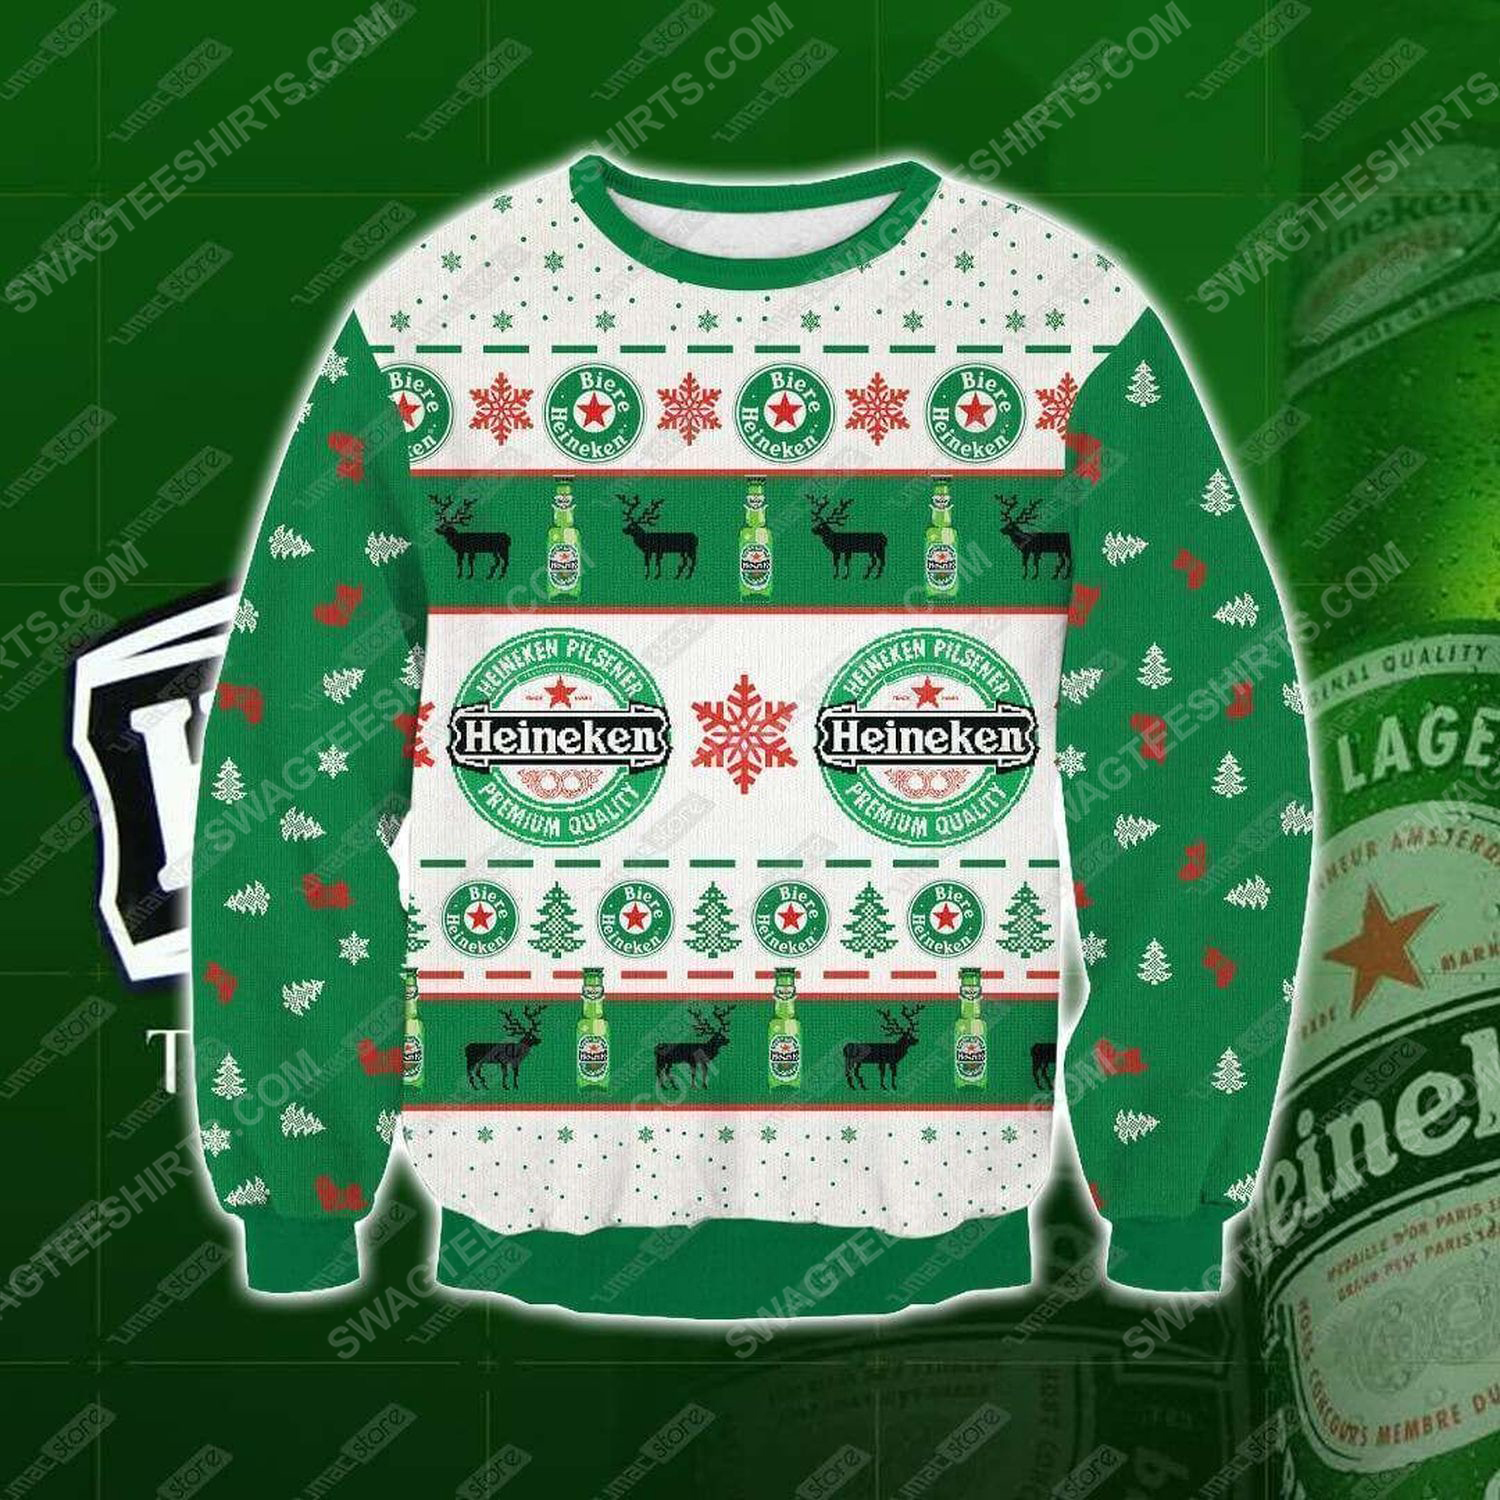 Heineken beer all over print ugly christmas sweater - Copy (2)